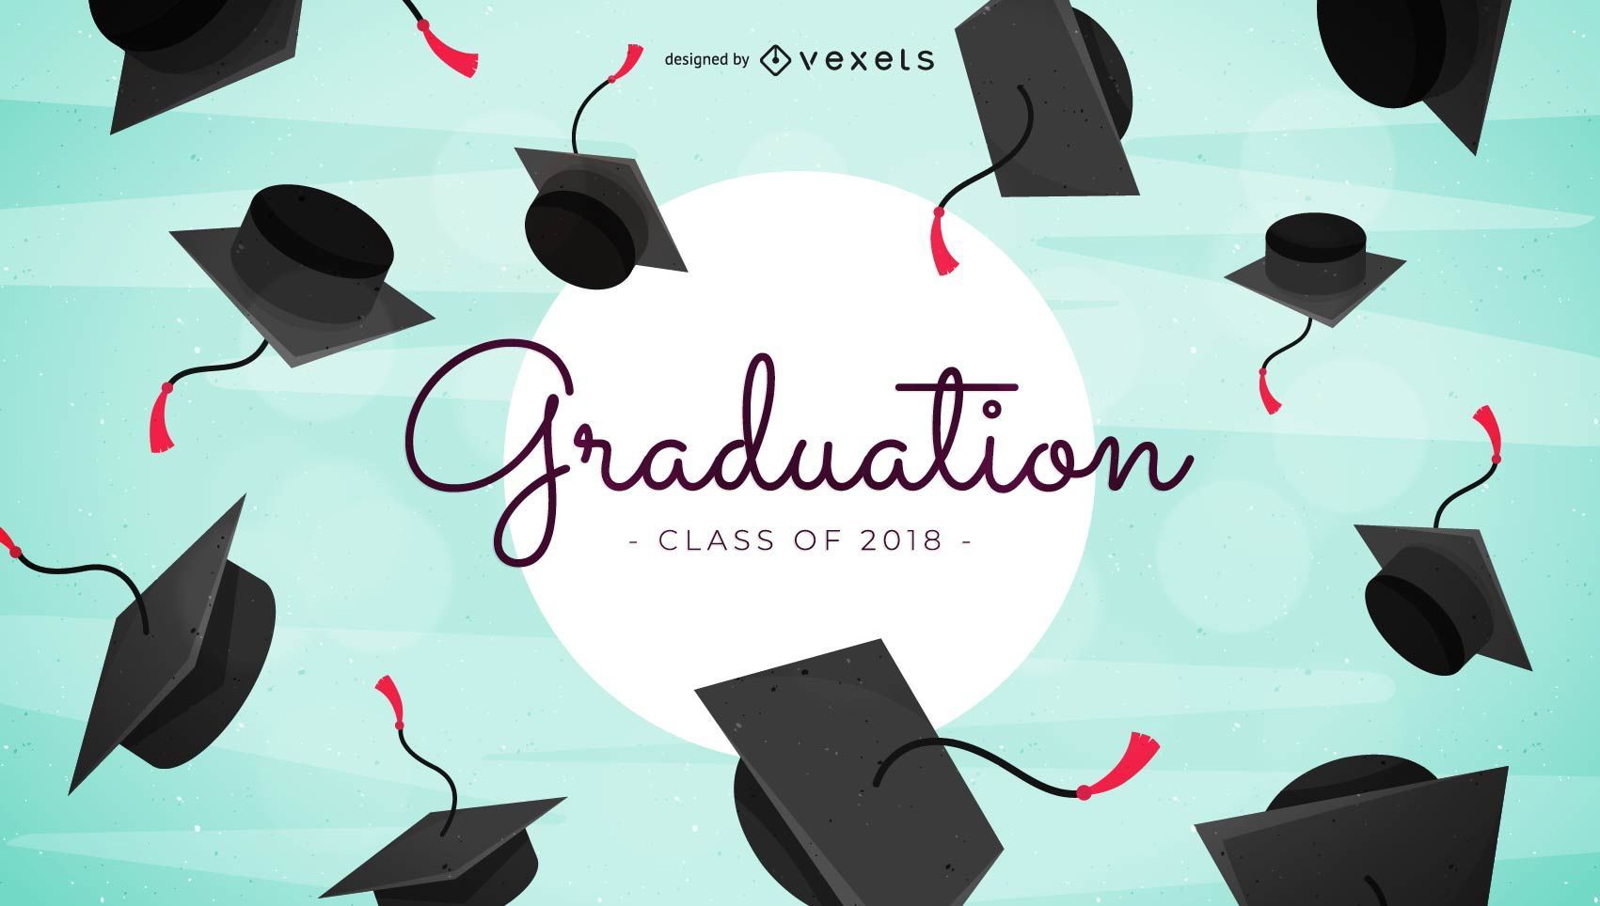 Graduation congratulations design